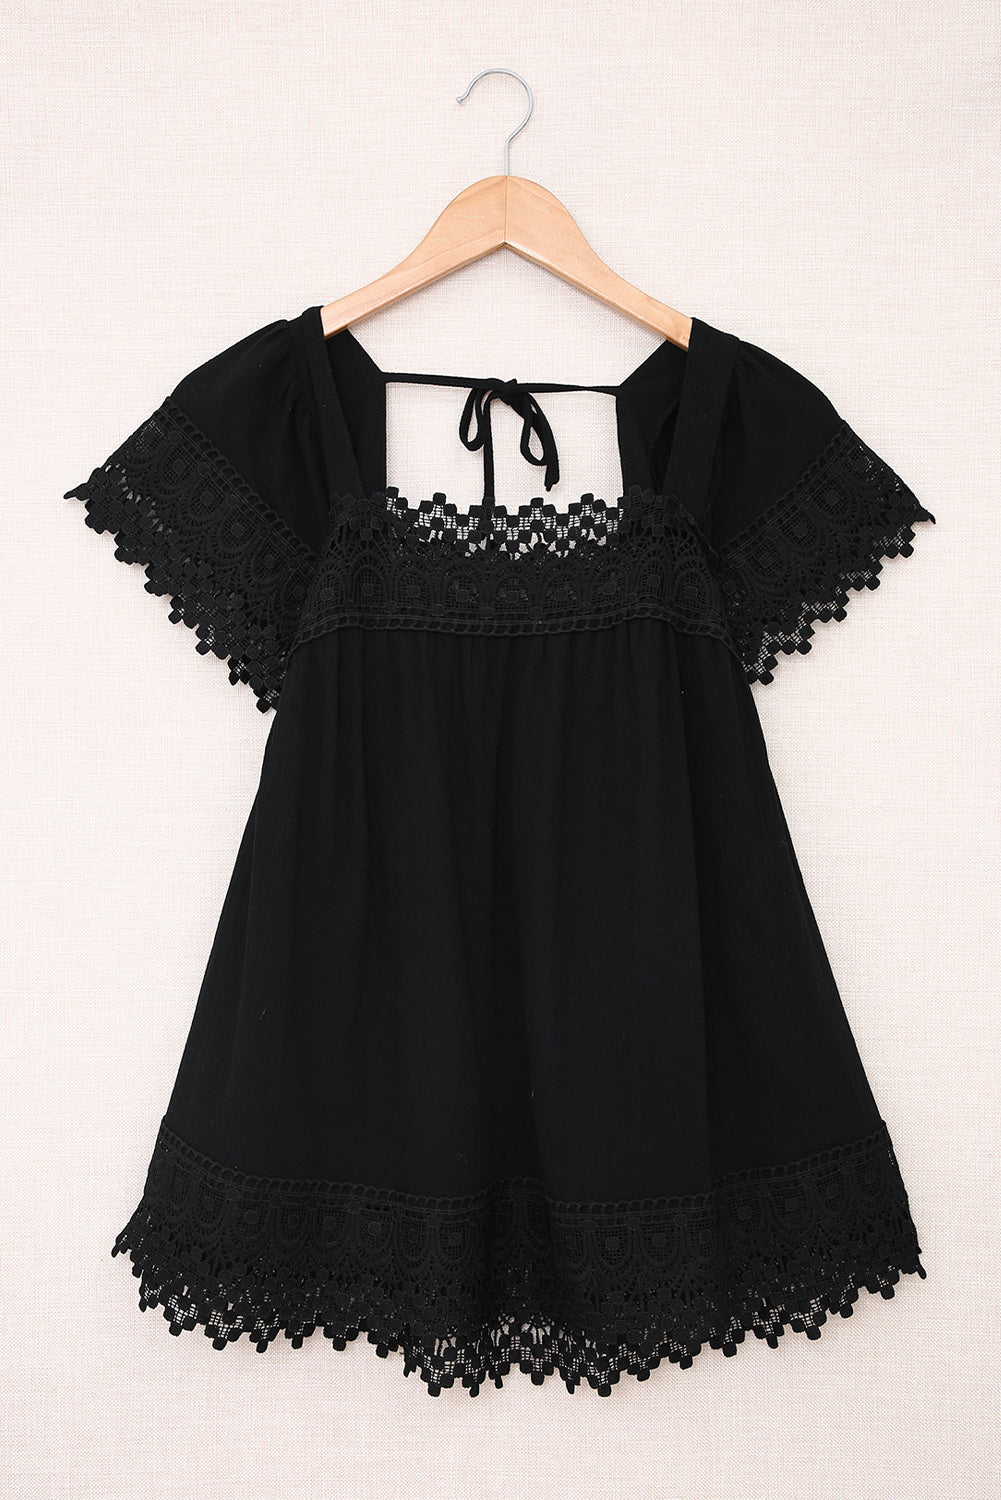 Black Elegant Lace Crochet Short Sleeve Square Neck Top